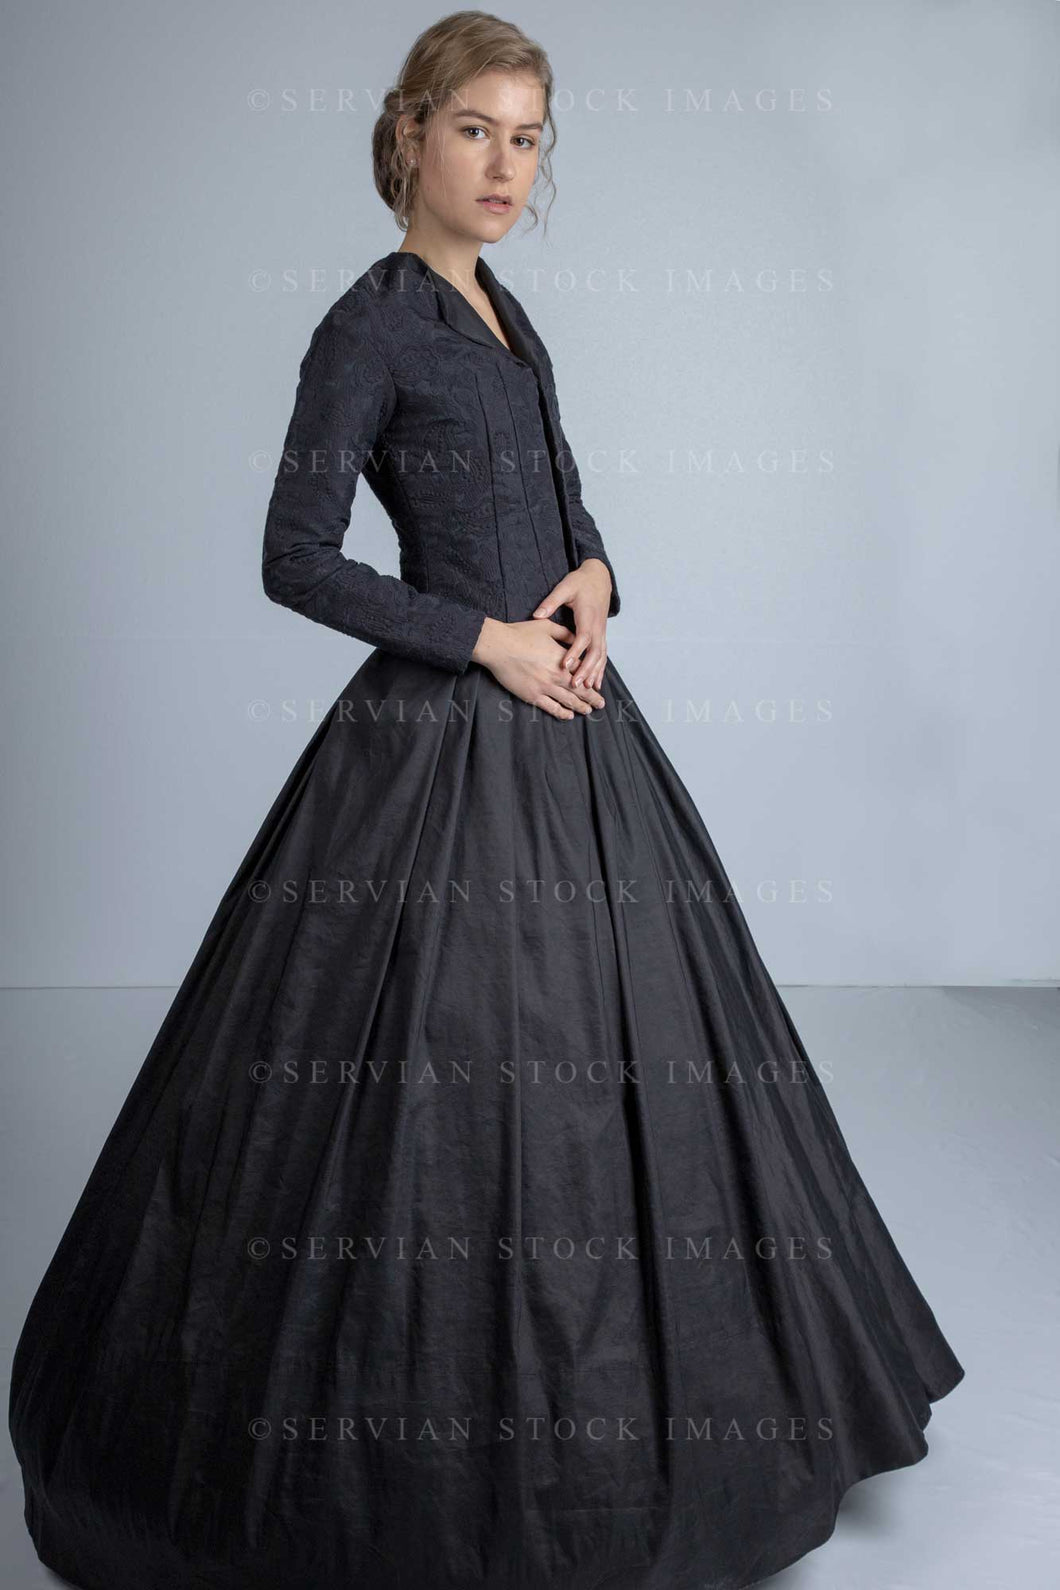 Victorian woman wearing a black bodice and skirt (Amalia 0703)